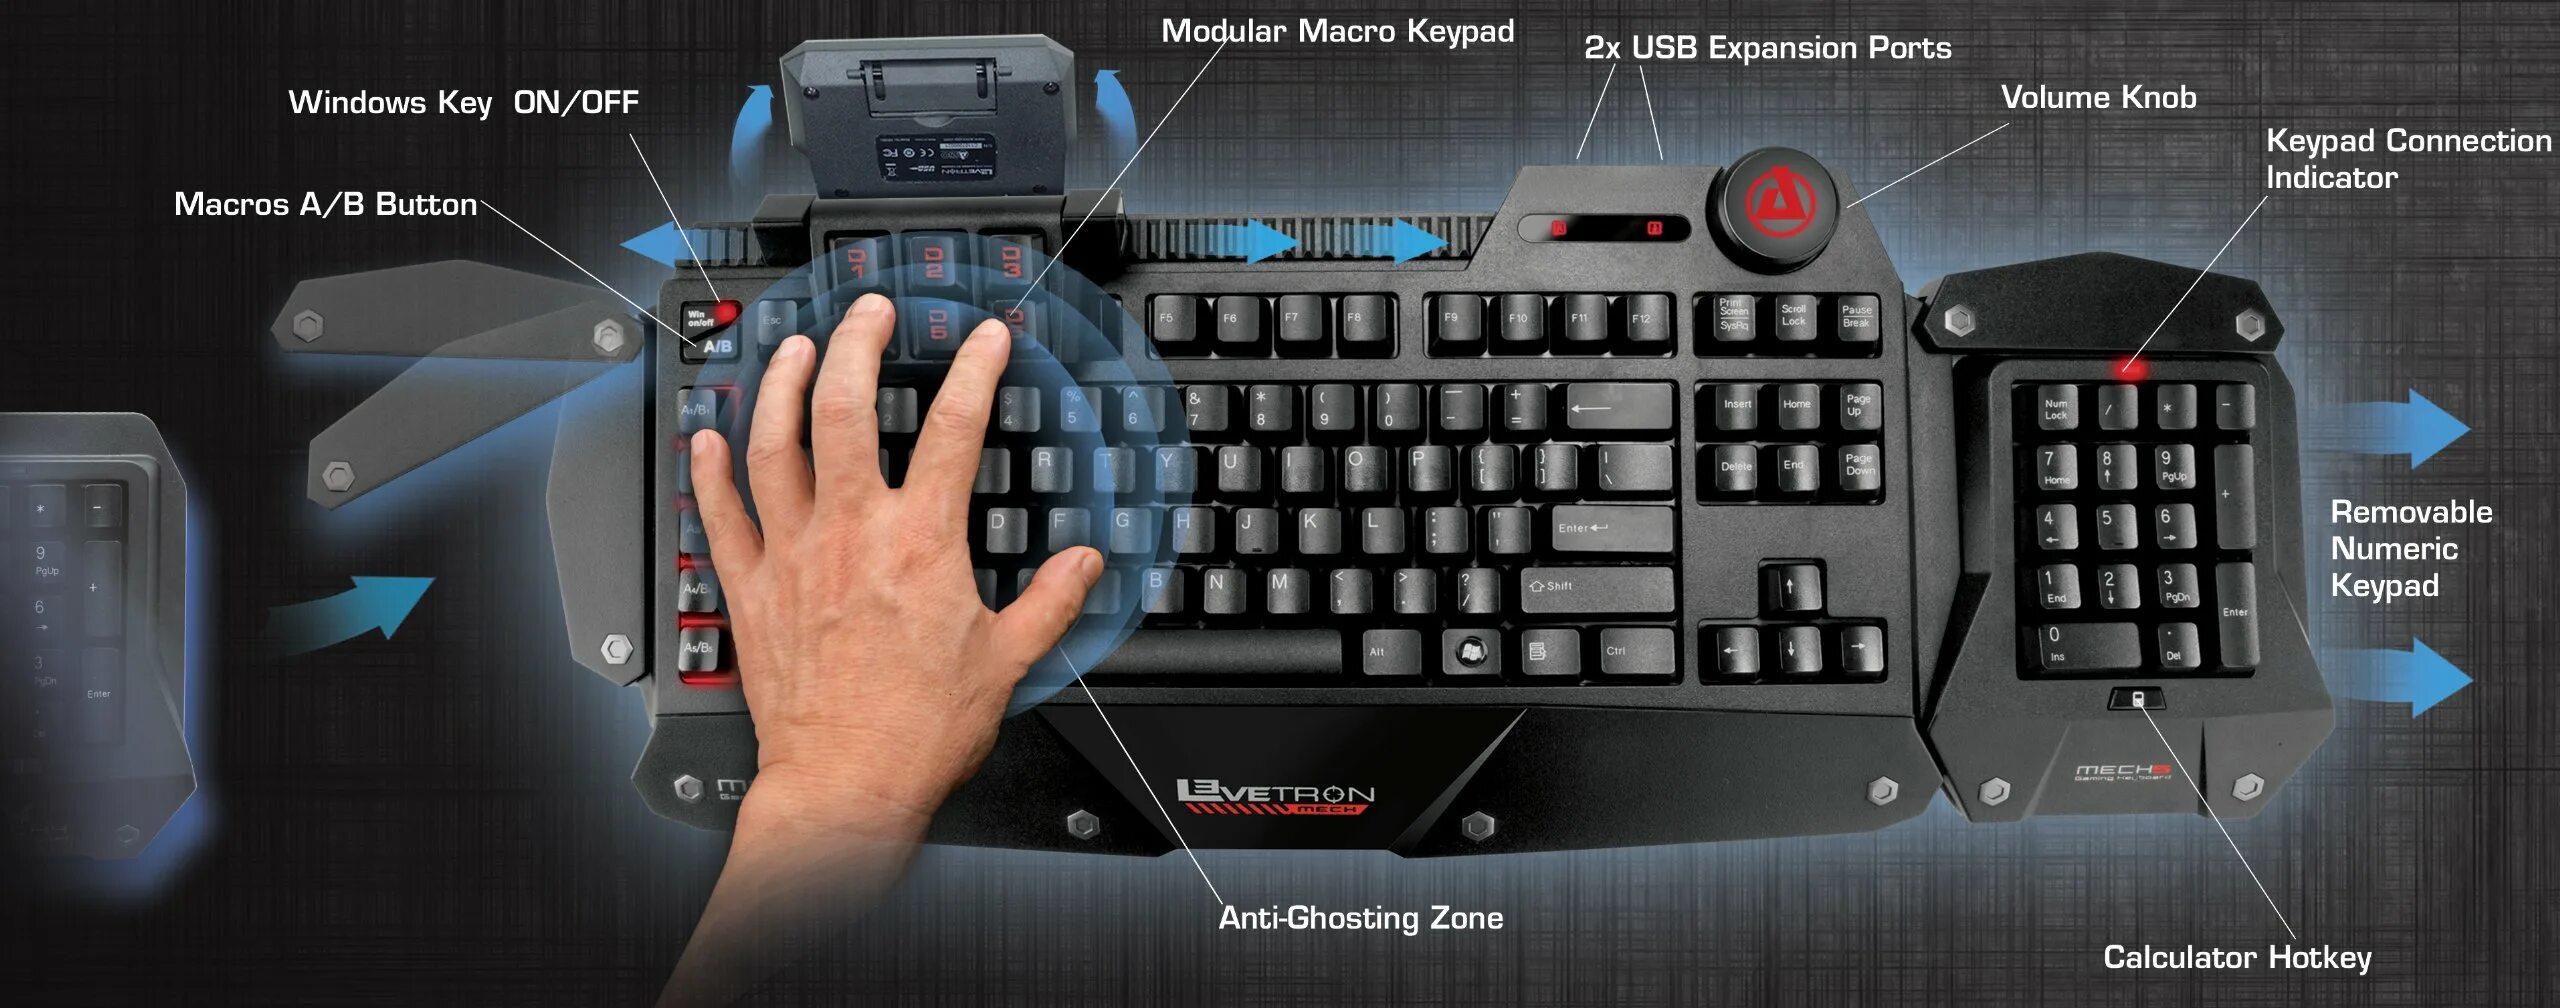 Mech4 Mechanical Gaming Keyboard клавиатура. Windows Key кнопка. Hotkey клавиша. Калибр клавиши управления.